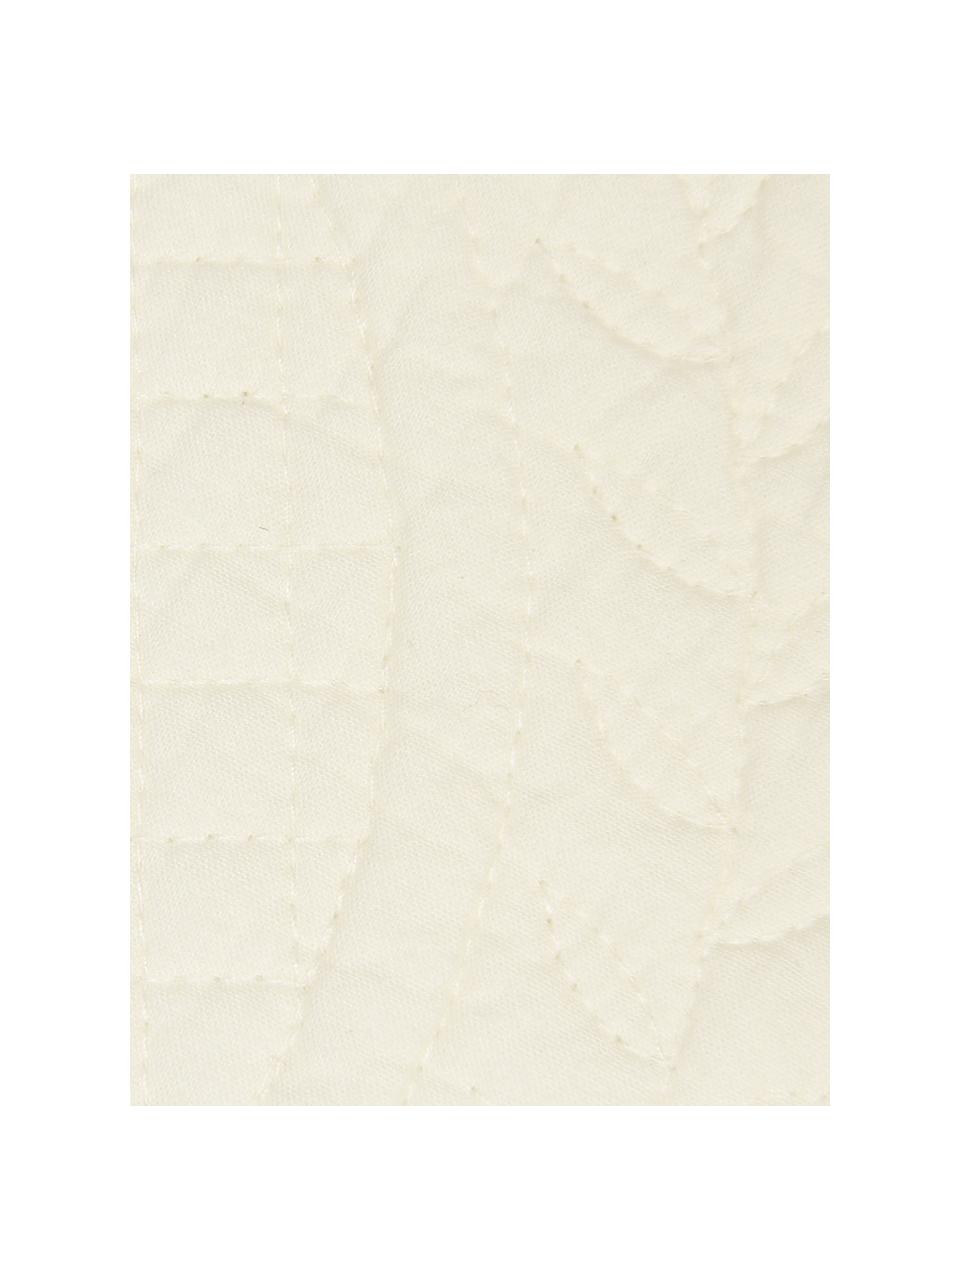 Manteles individuales Boutis, 2 uds., 100% algodón, Off White, An 34 x L 48 cm